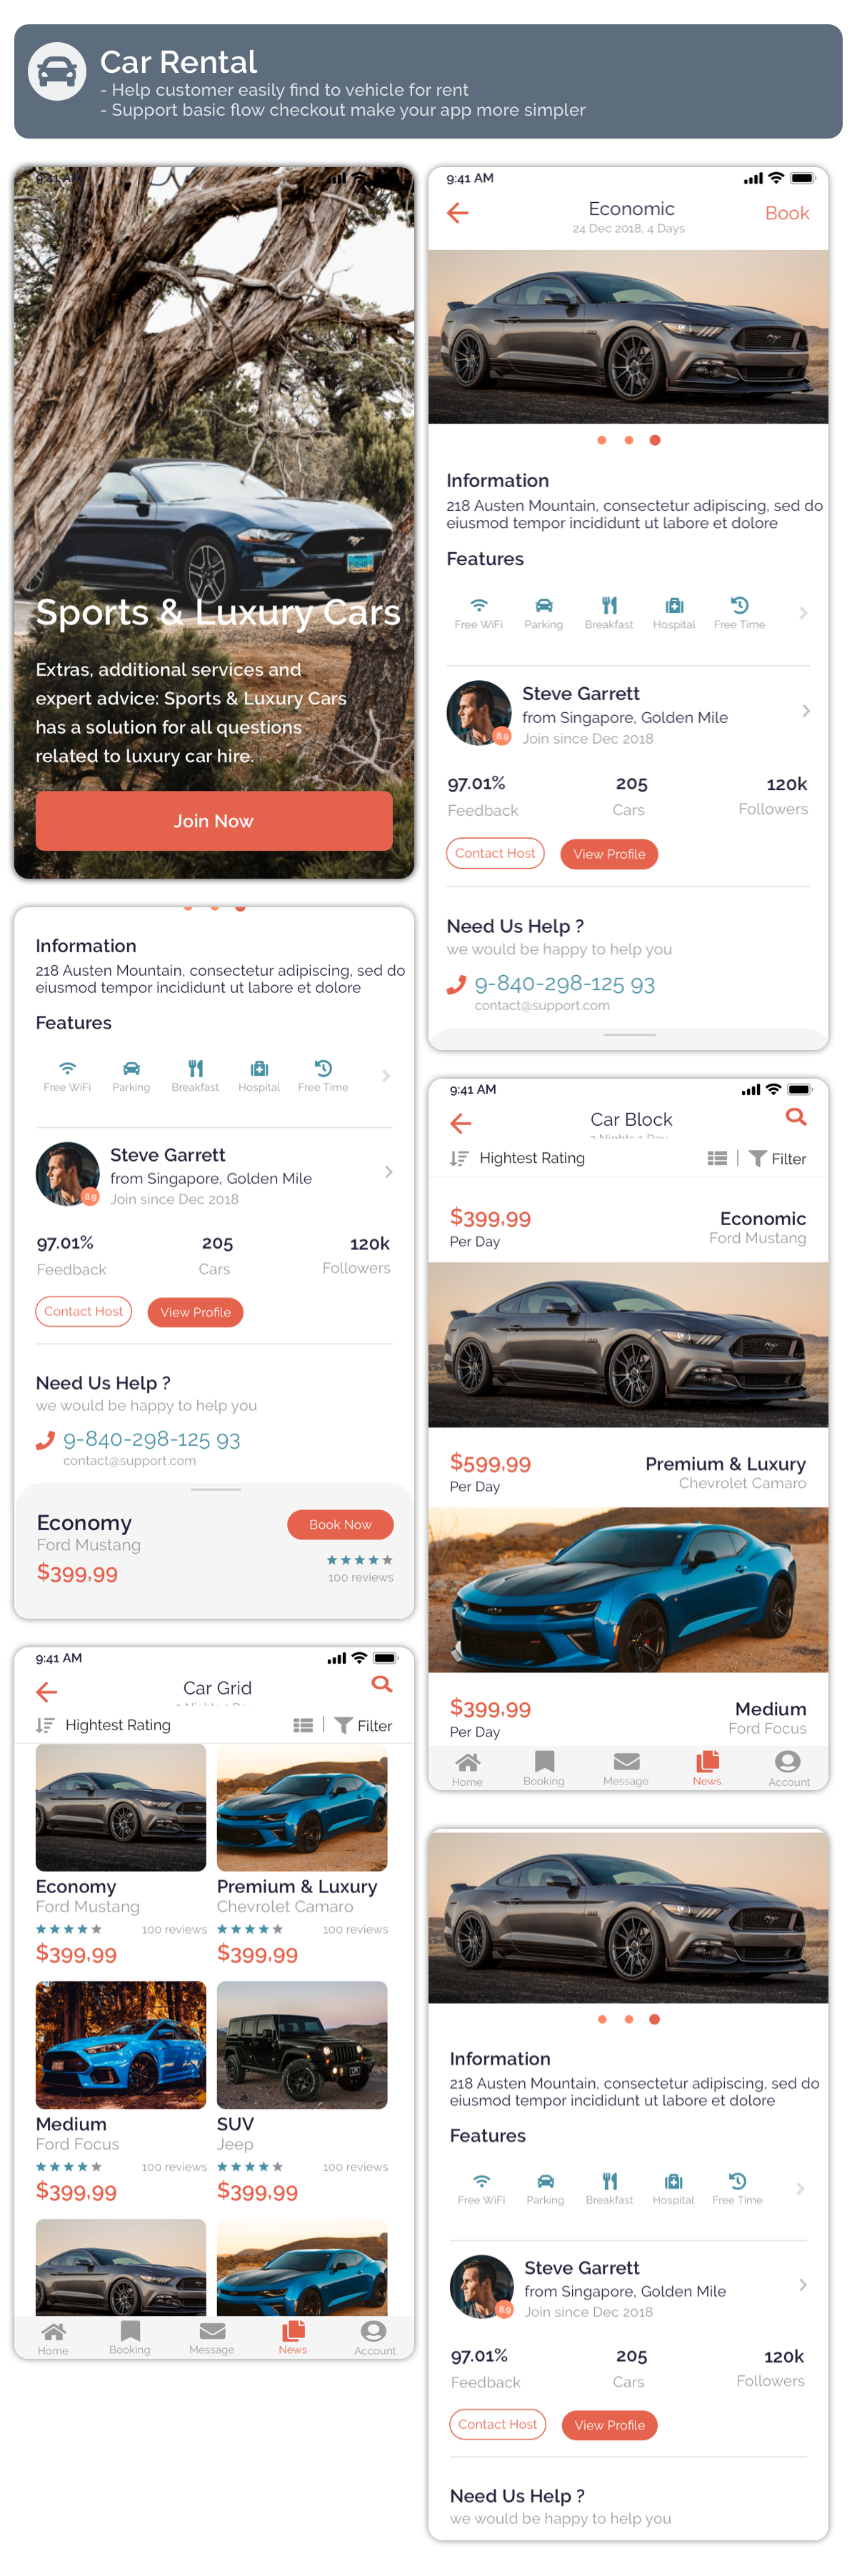 Felix Travel - mobile React Native travel app template - 5